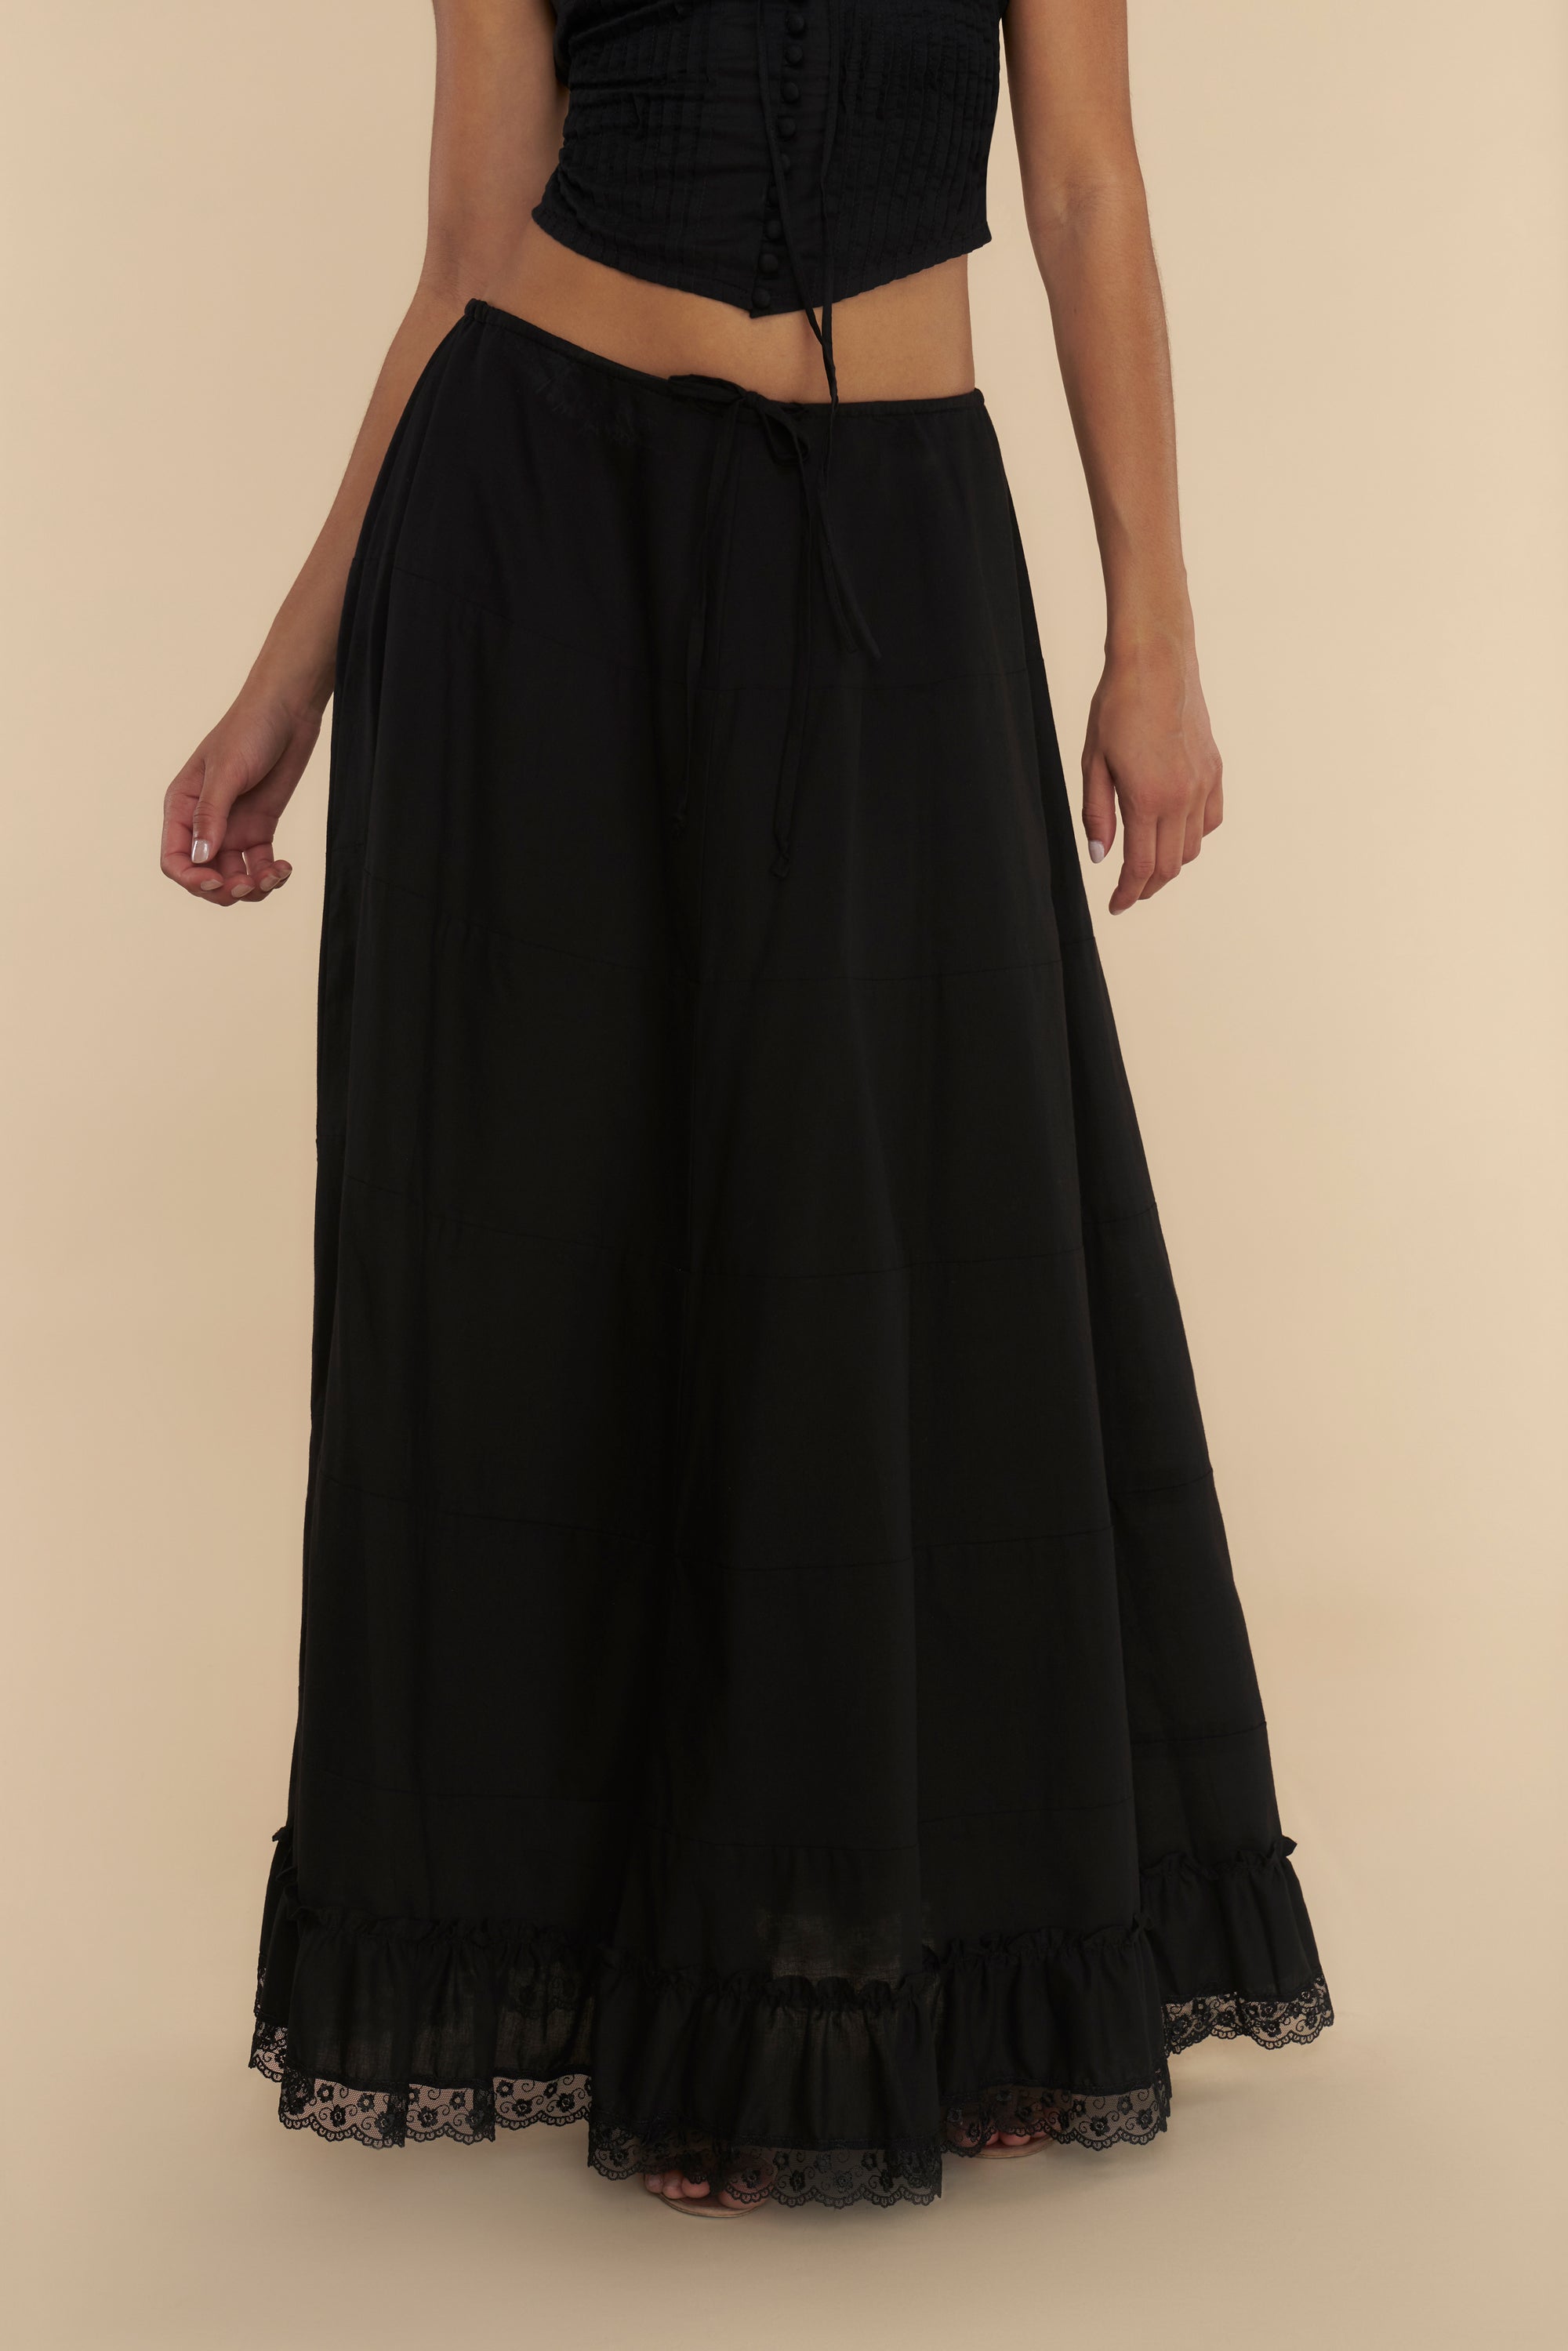 Petticoat in Noir